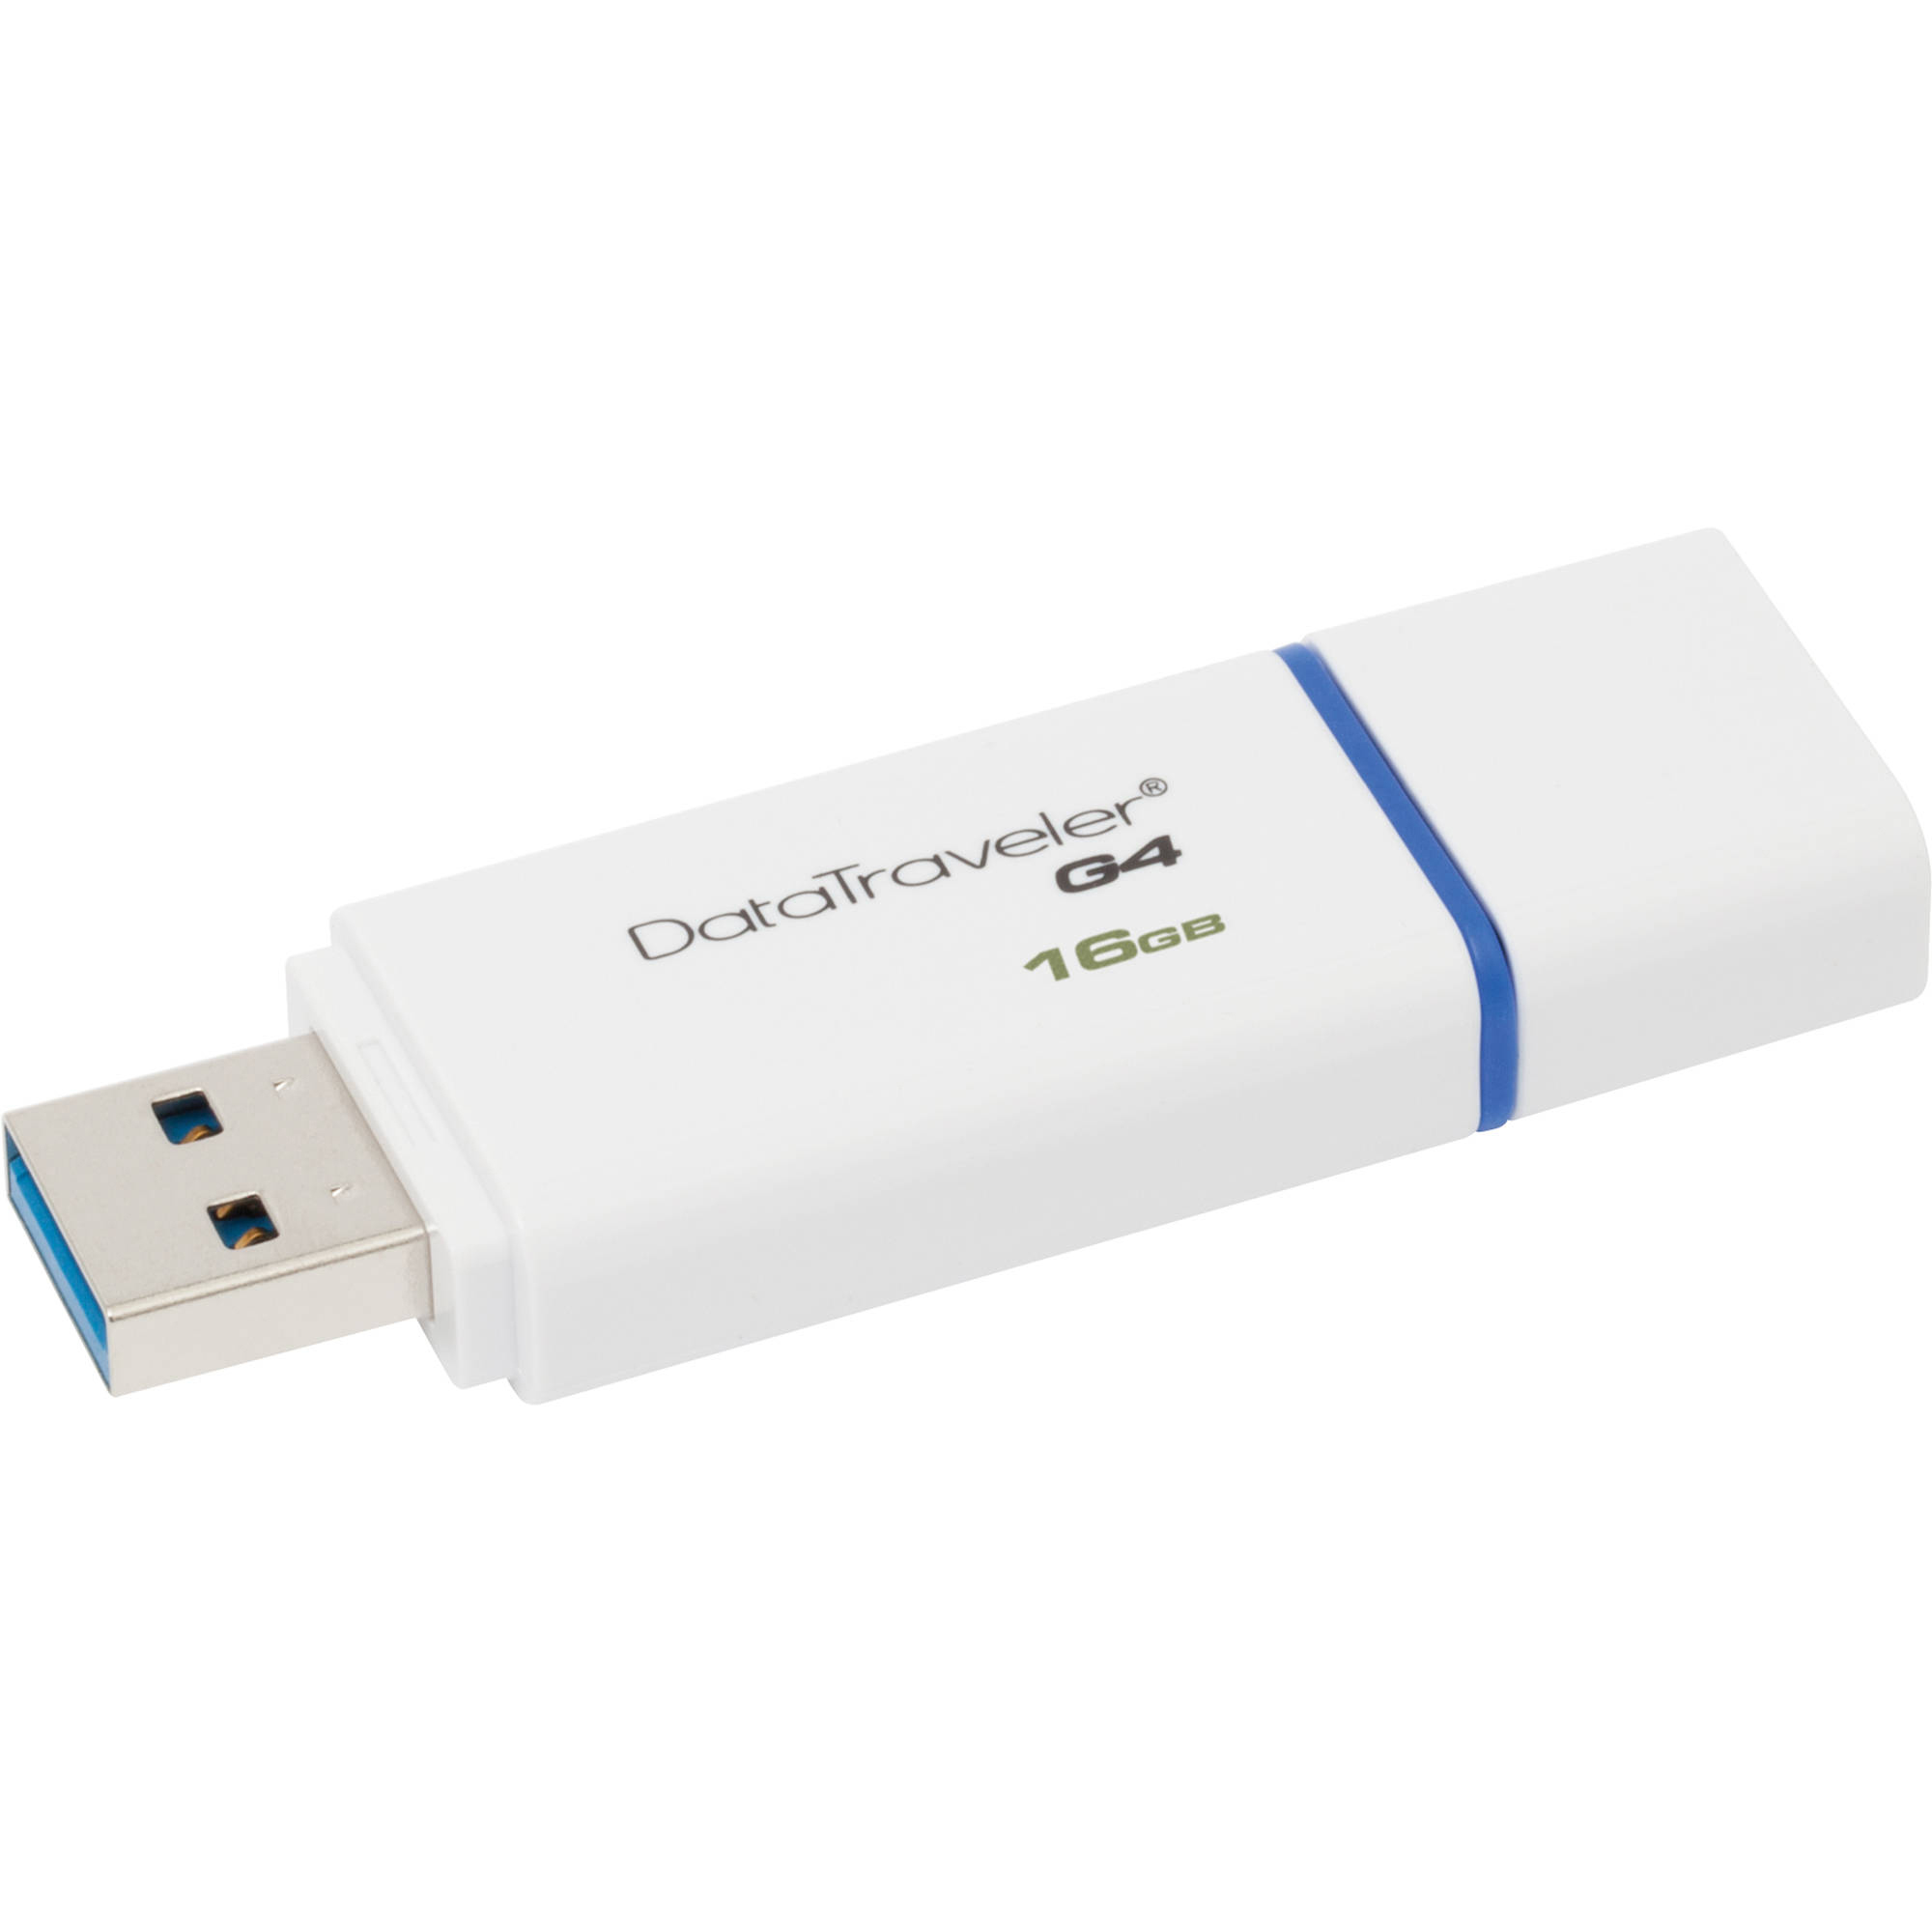 Original Kingston Data Traveler G4 16GB Blue/White USB 3.0 Flash Drive (DTIG4/16GB)